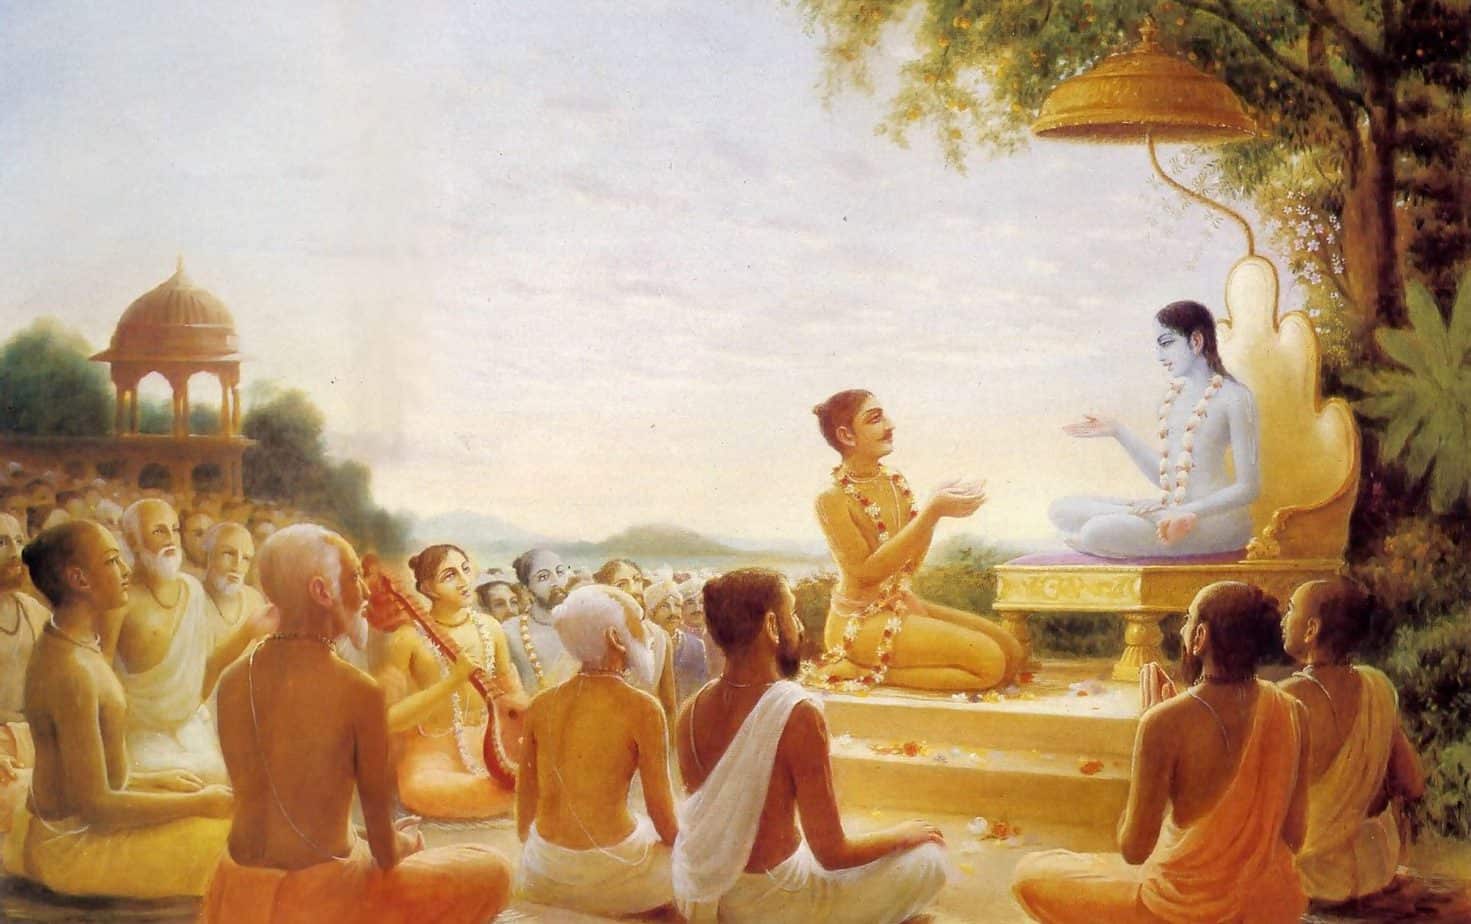 Foundation to hear Sri Krishna Pastimes